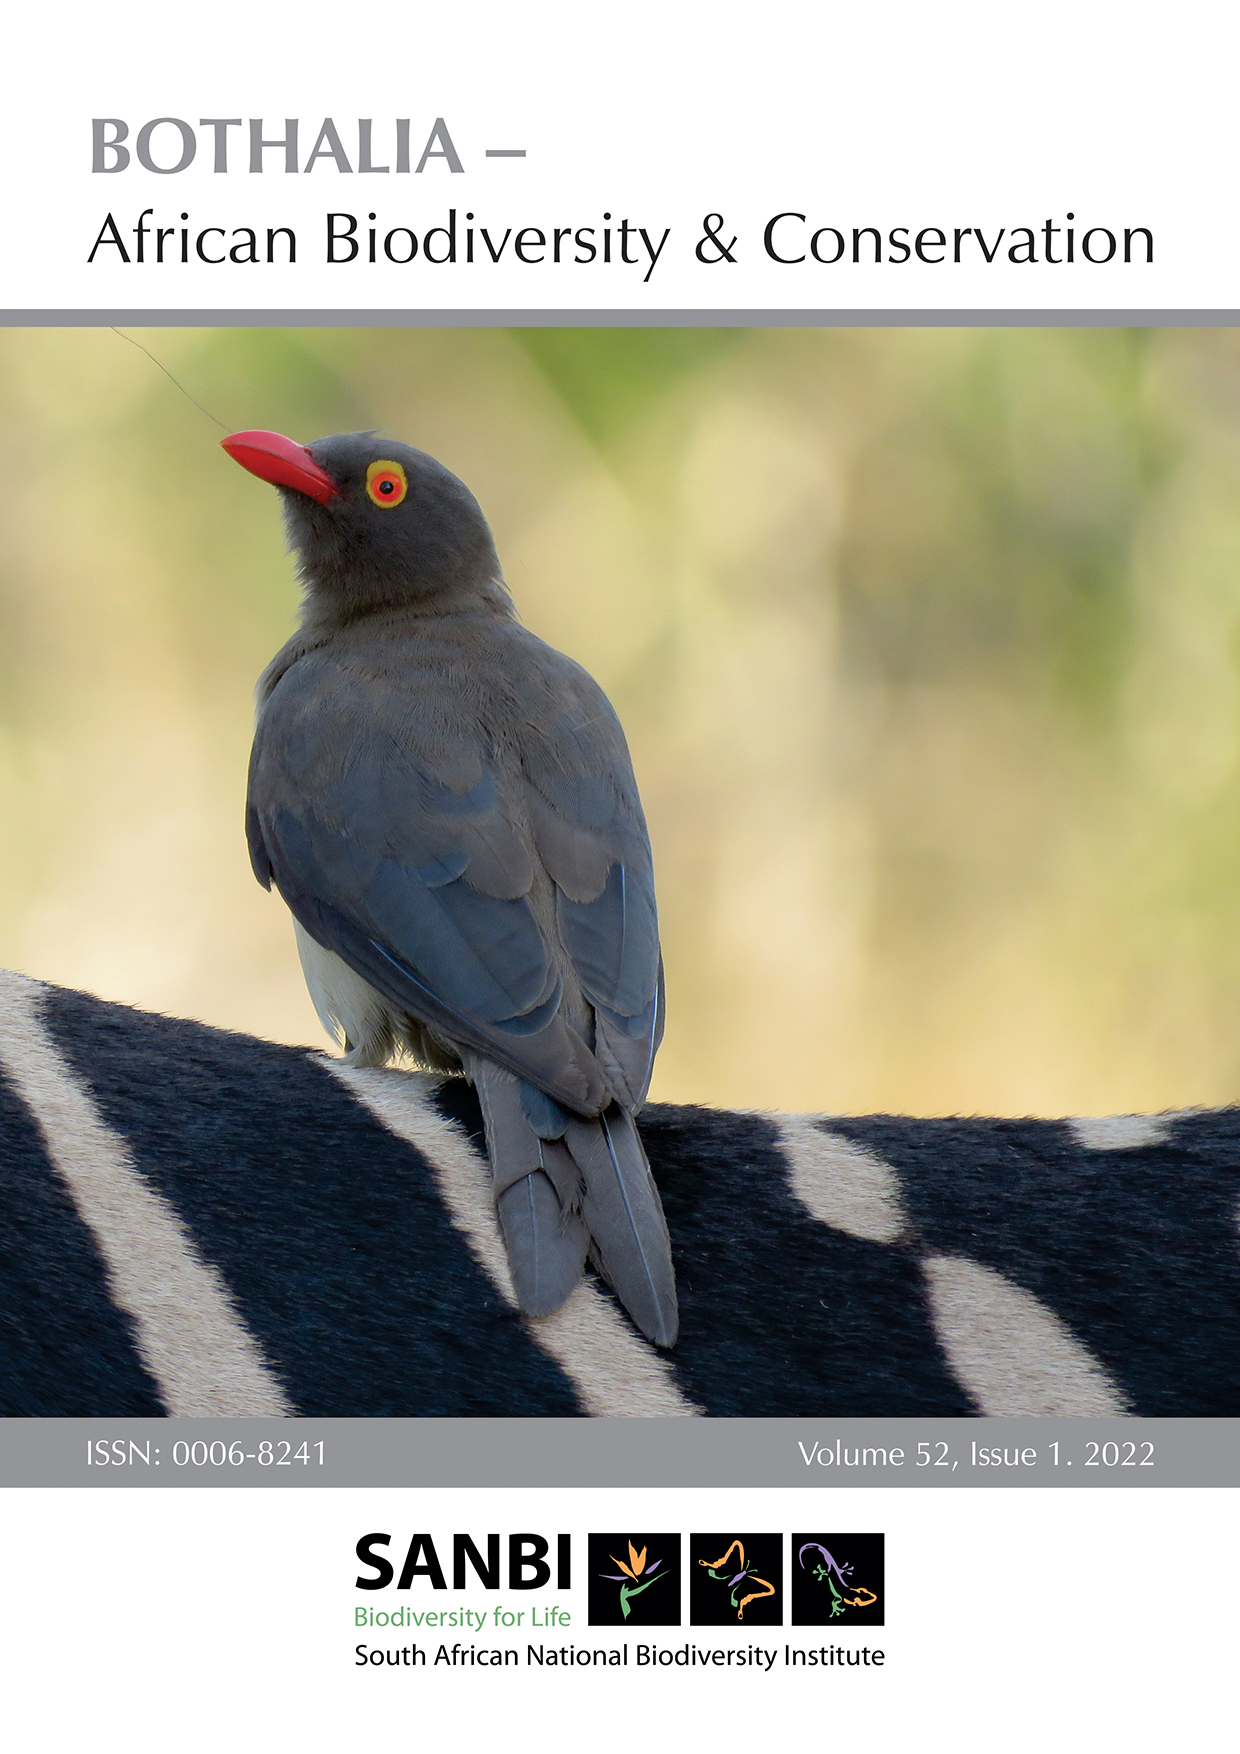 					View Vol. 52 No. 1 (2022): Bothalia, African Biodiversity & Conservation
				